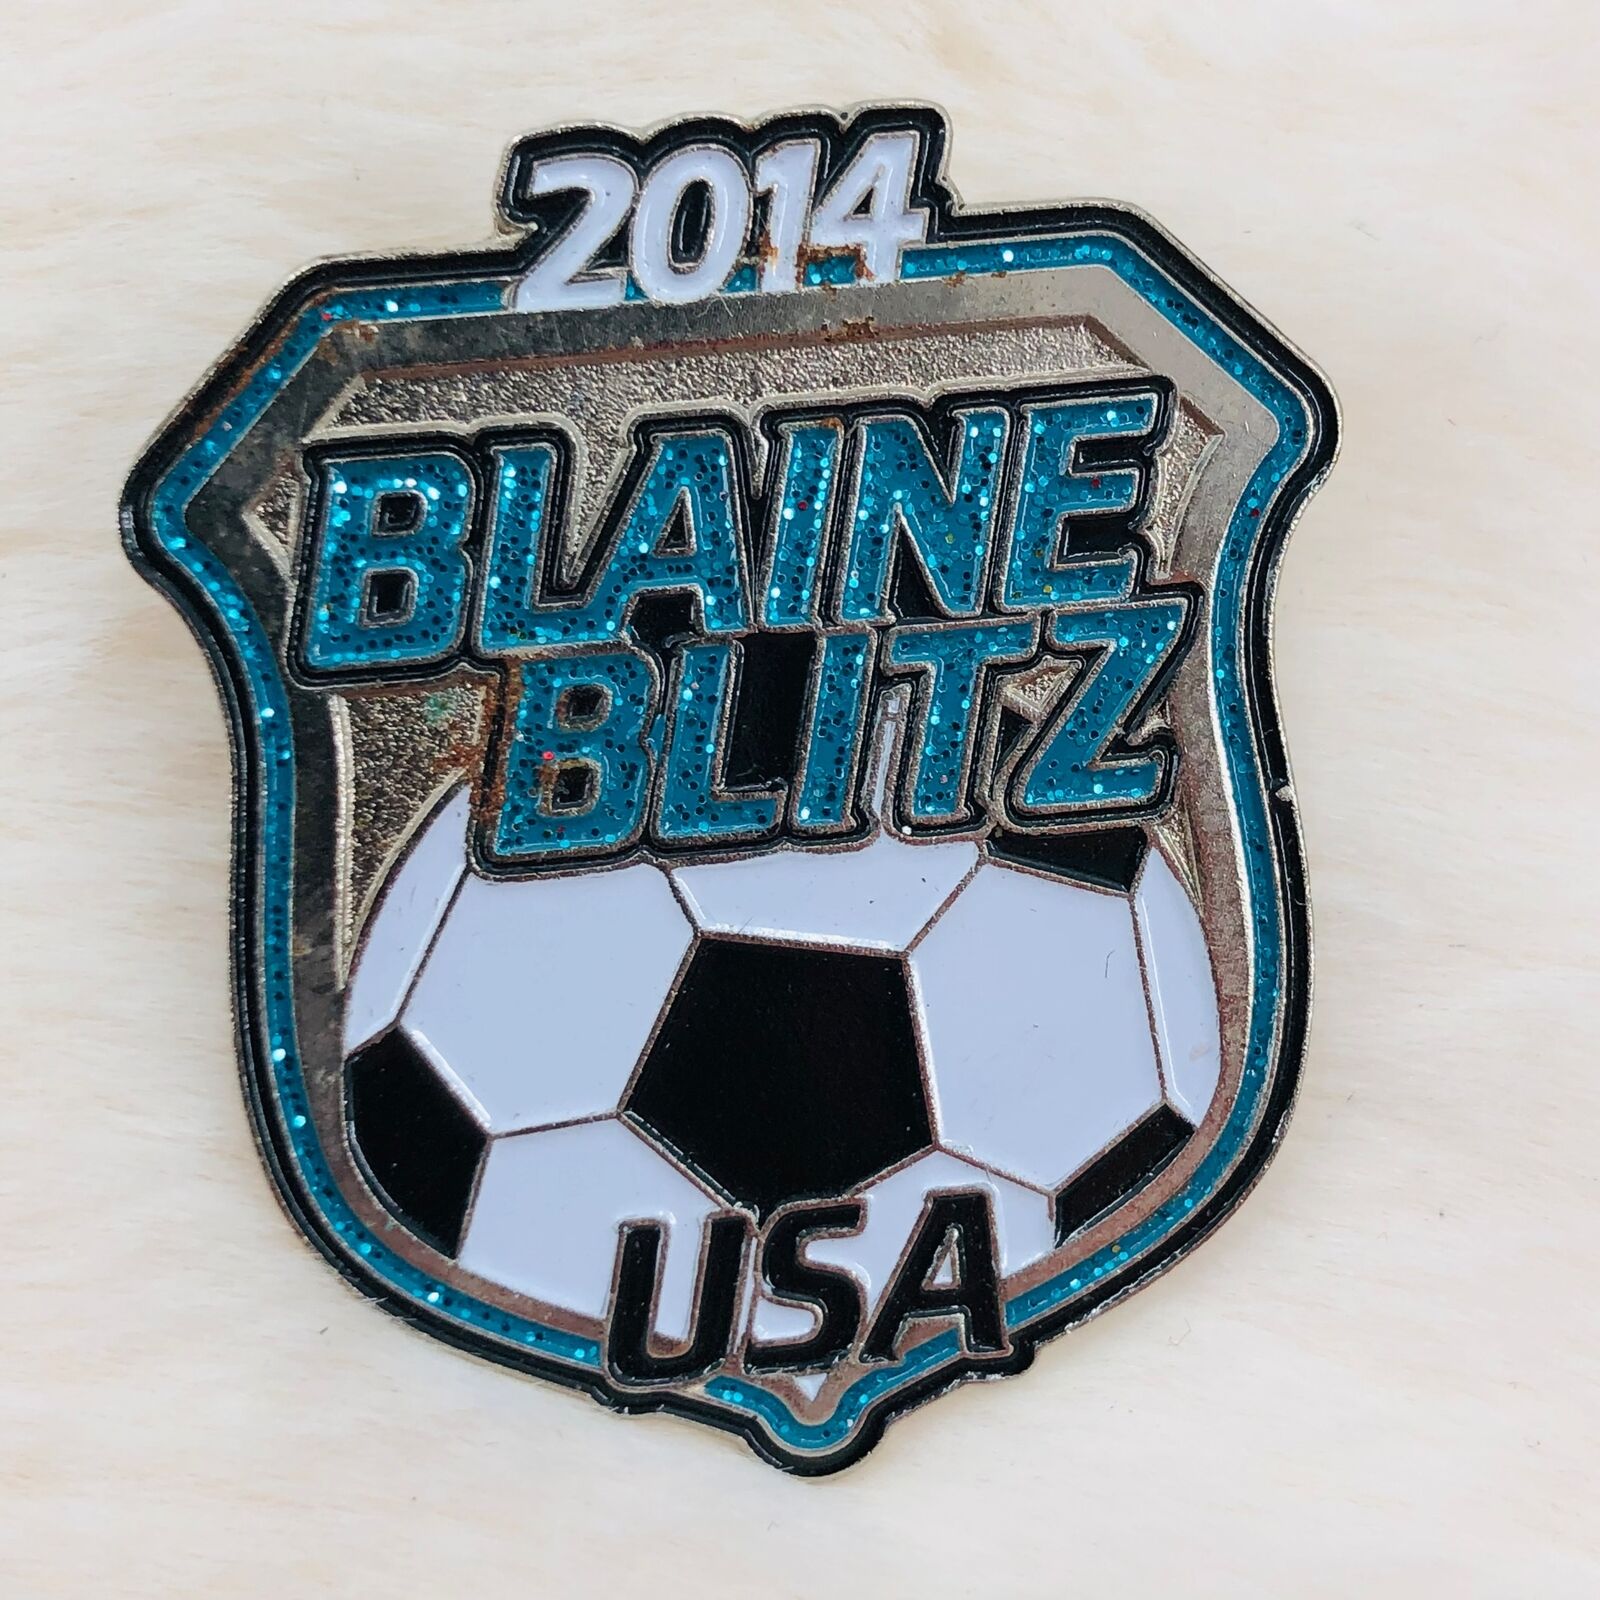 2014 Blaine Blitz Minnesota Youth Soccer Academy Enamel Lapel Pin